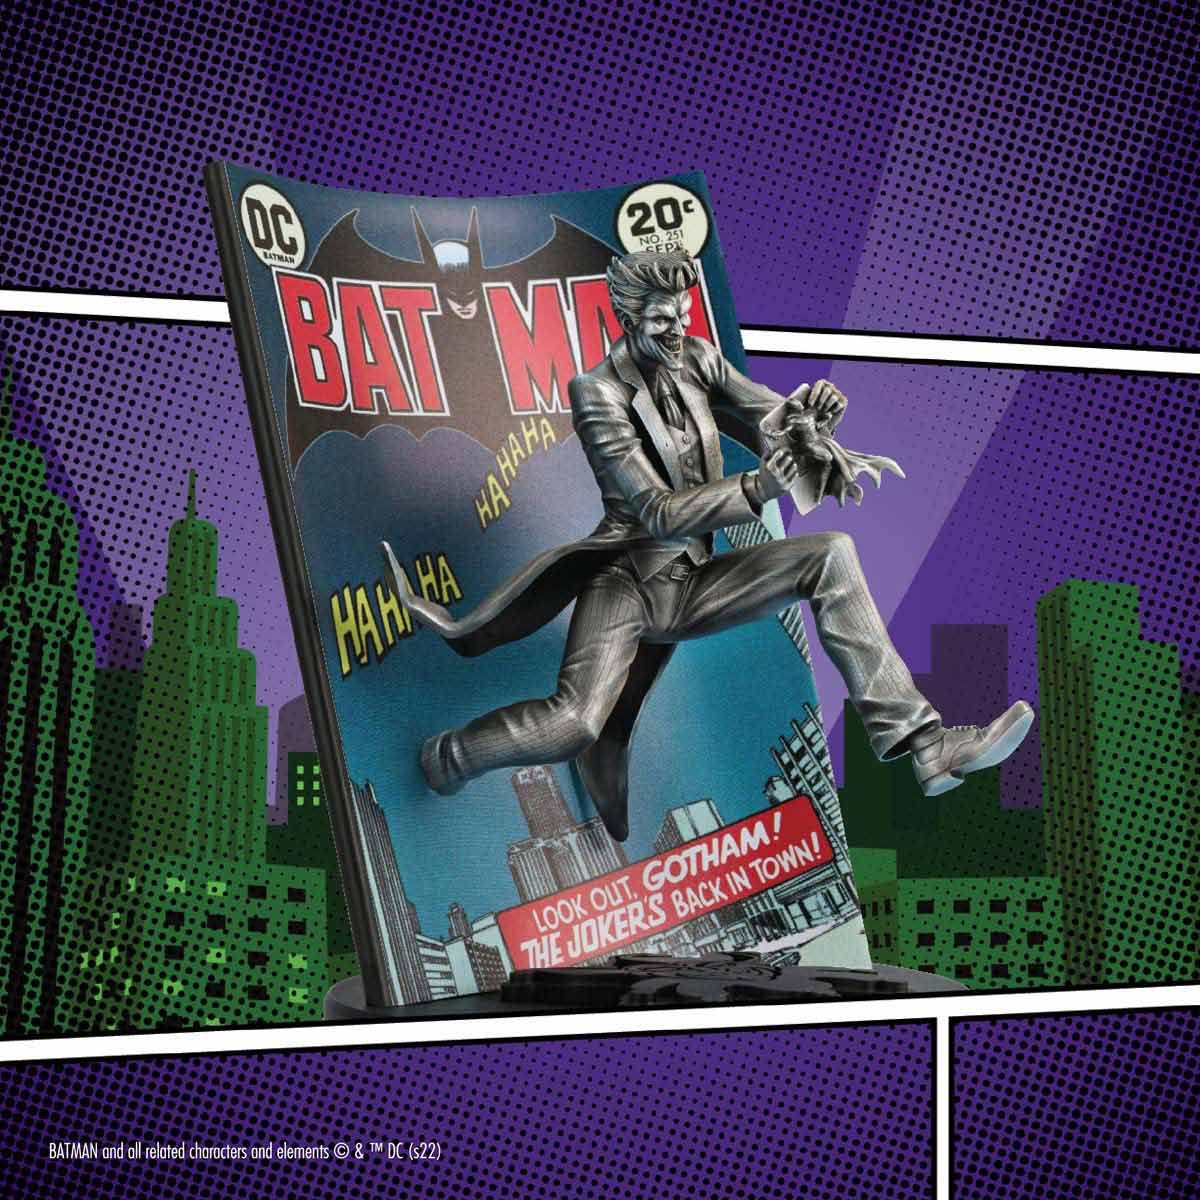 The Joker Batman Volume 1 #251 Figurine - Collectible Gift Statue